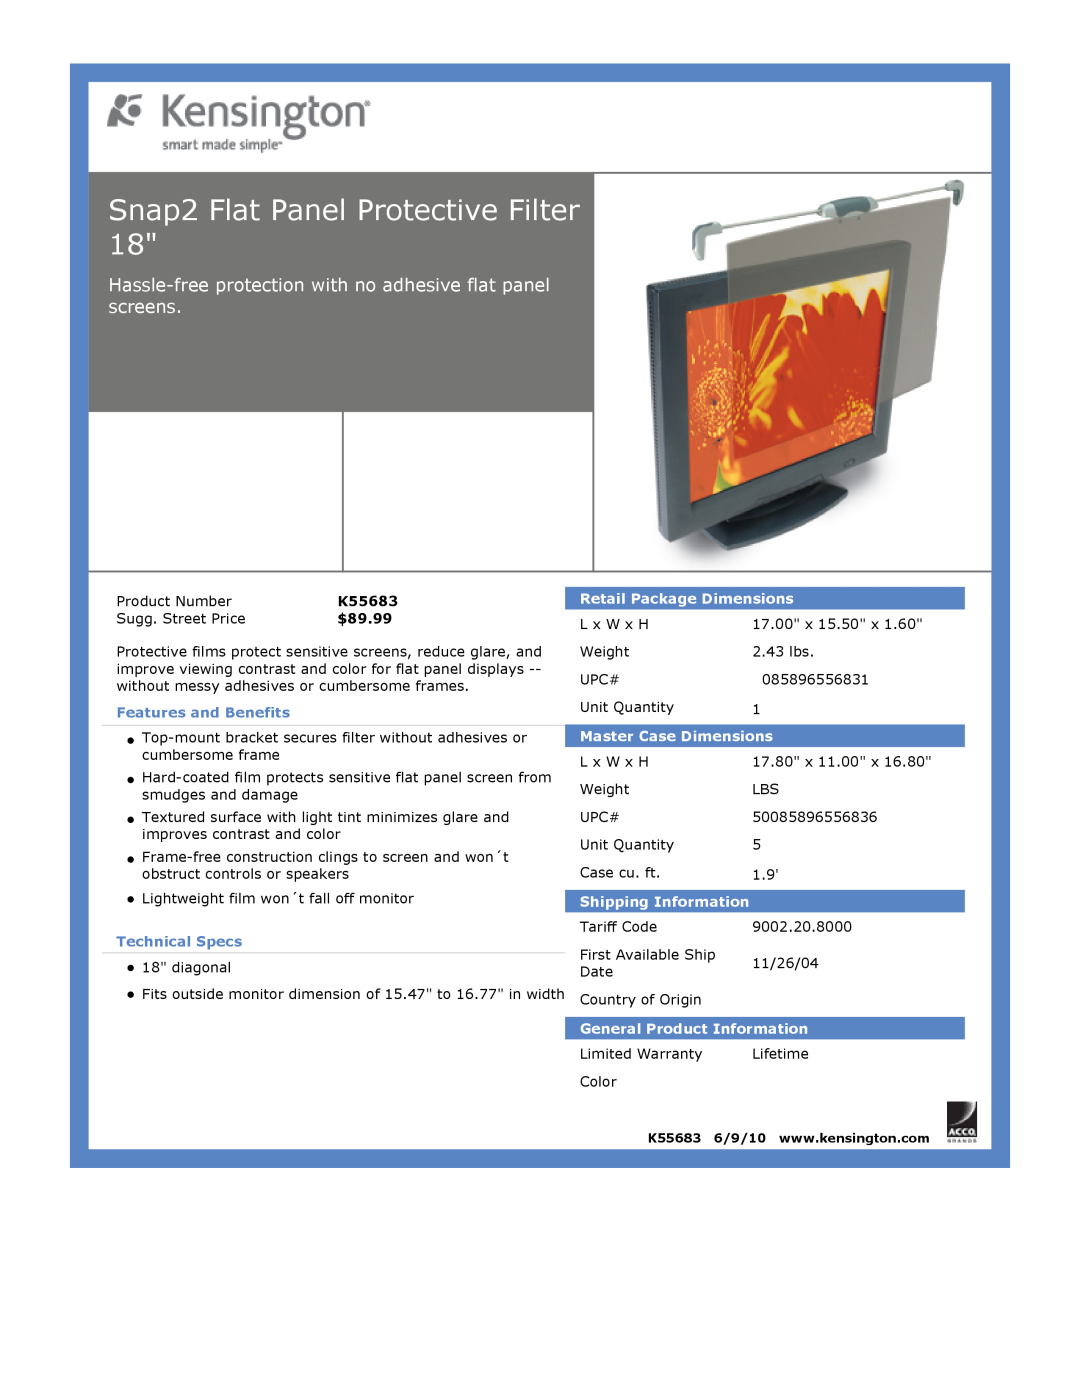 Kensington EU64325 dimensions $89.99, Snap2 Flat Panel Protective Filter, Features and Benefits, Technical Specs 